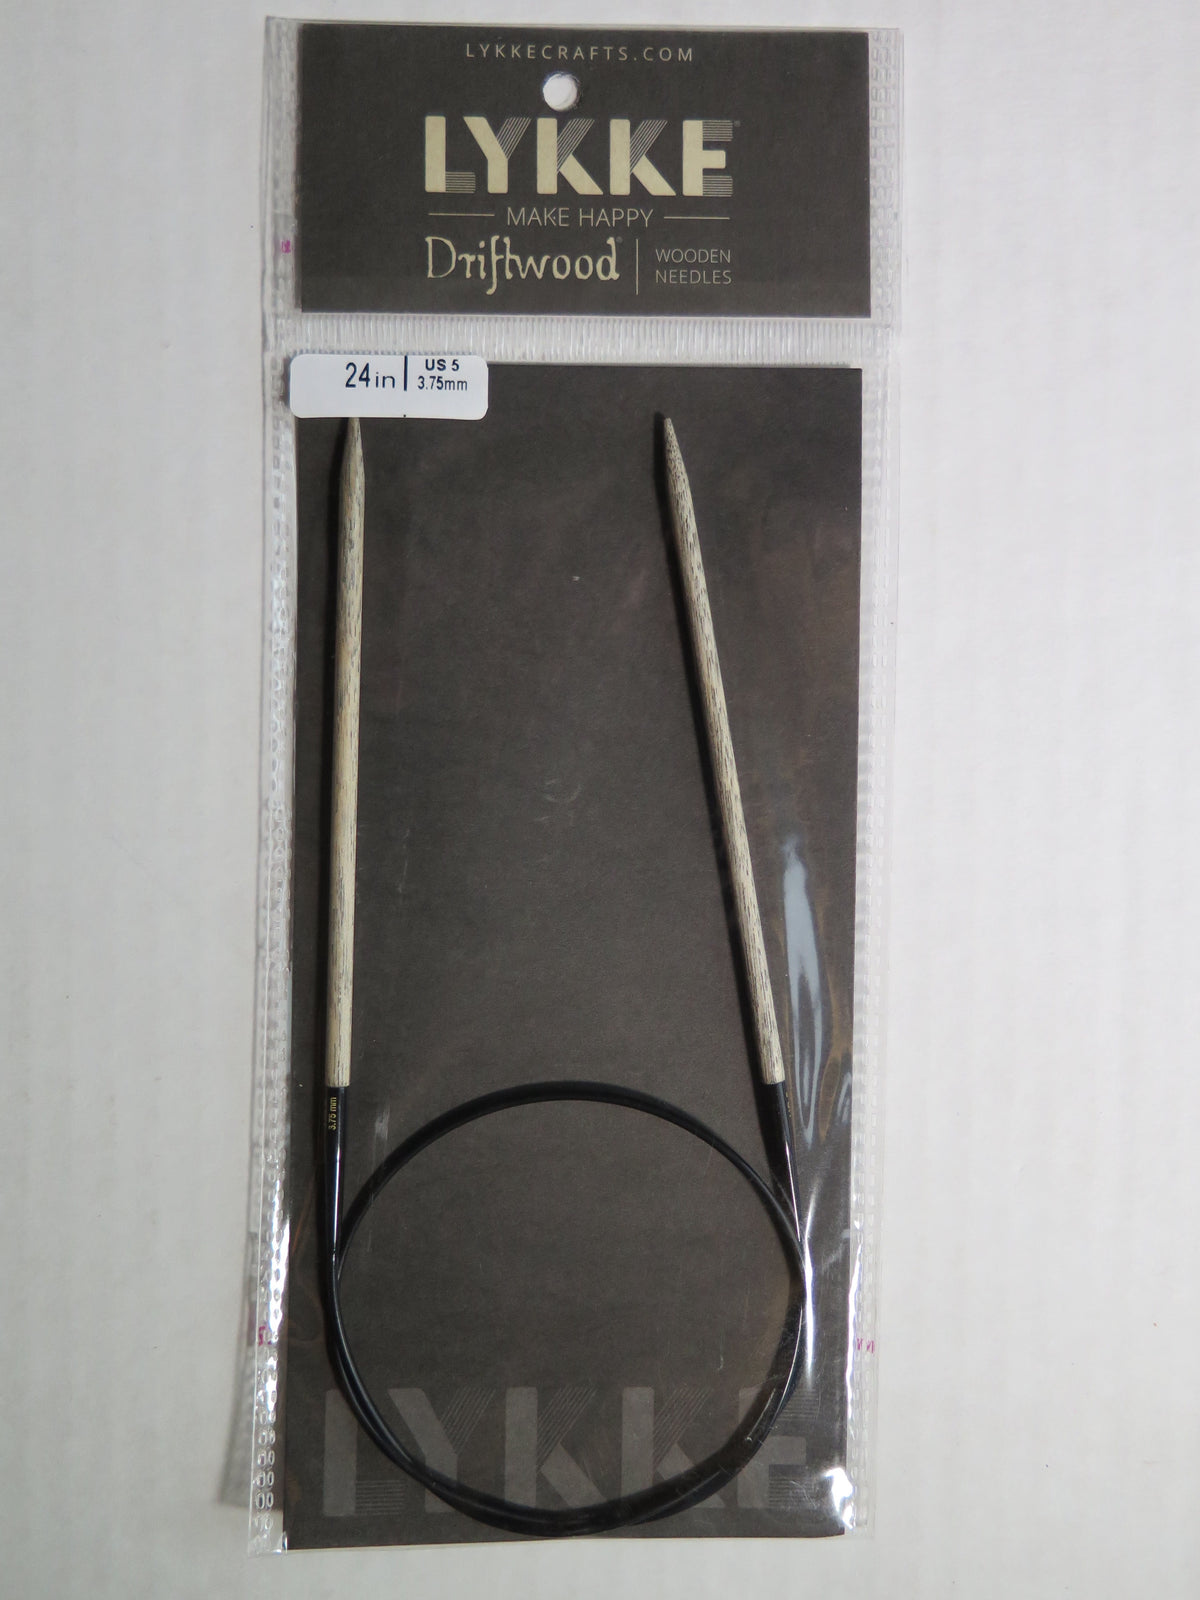 Lykke Driftwood 24in US 5 3.75mm Circular Needle